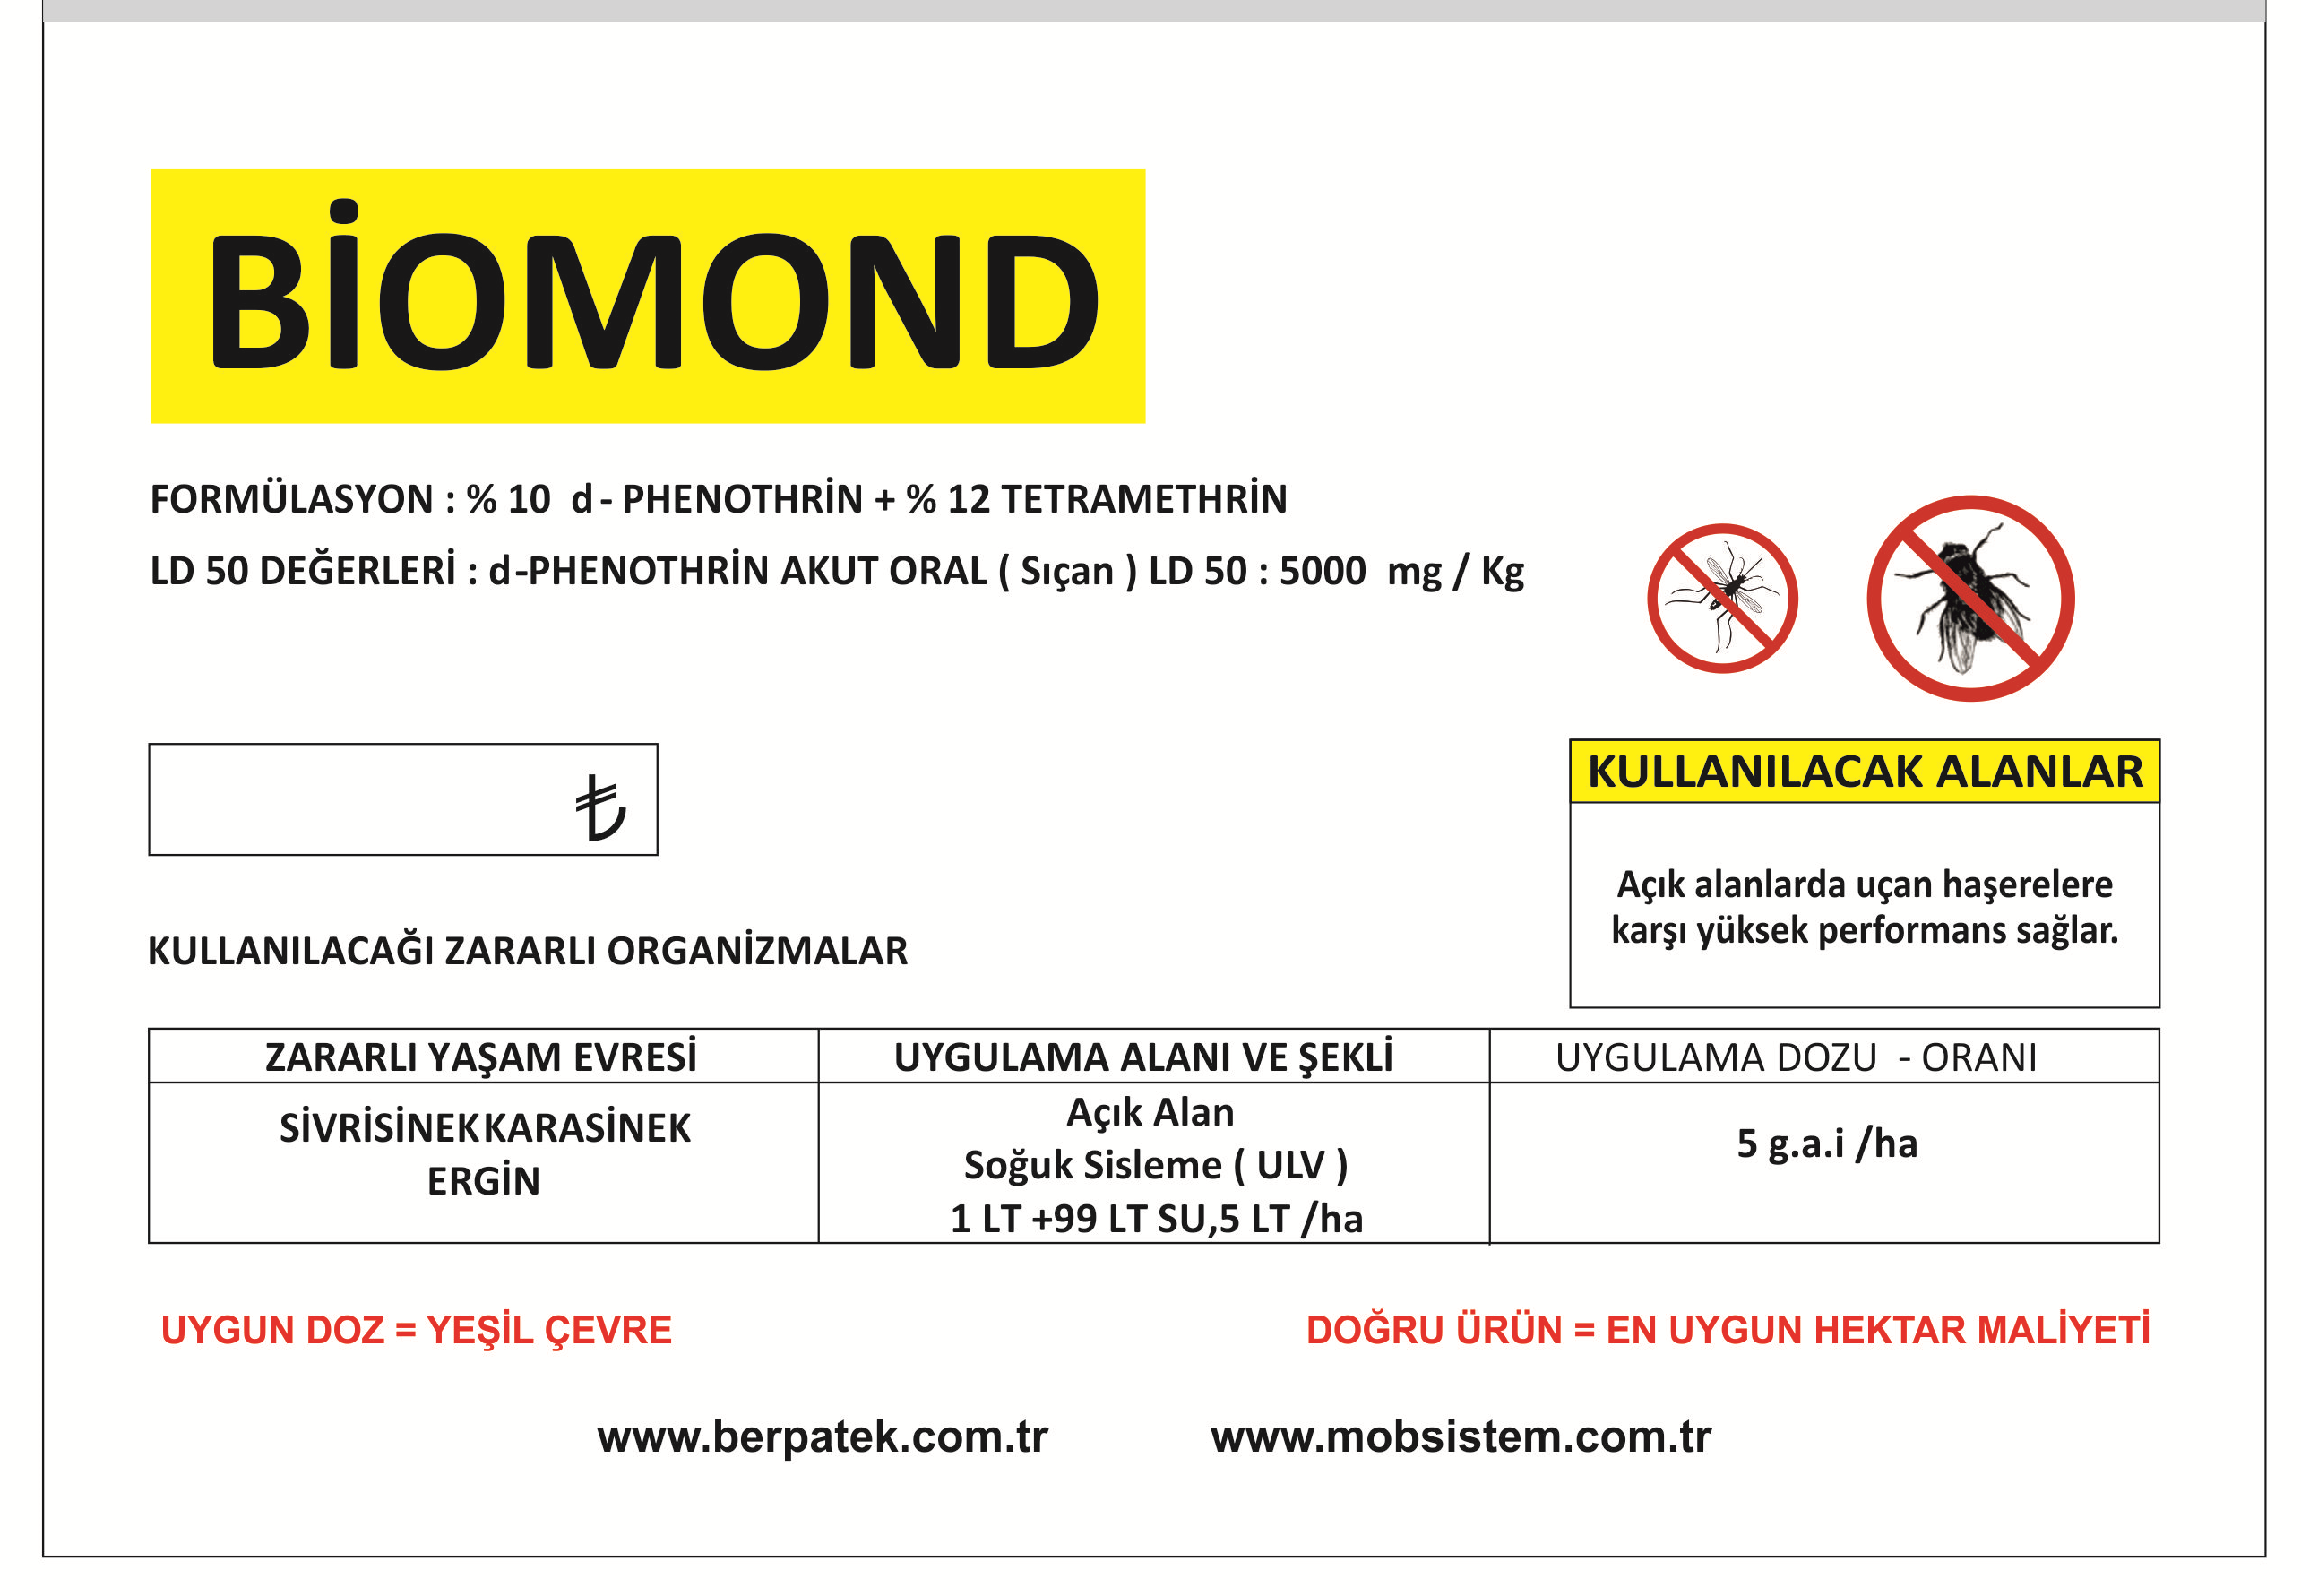 Biomond